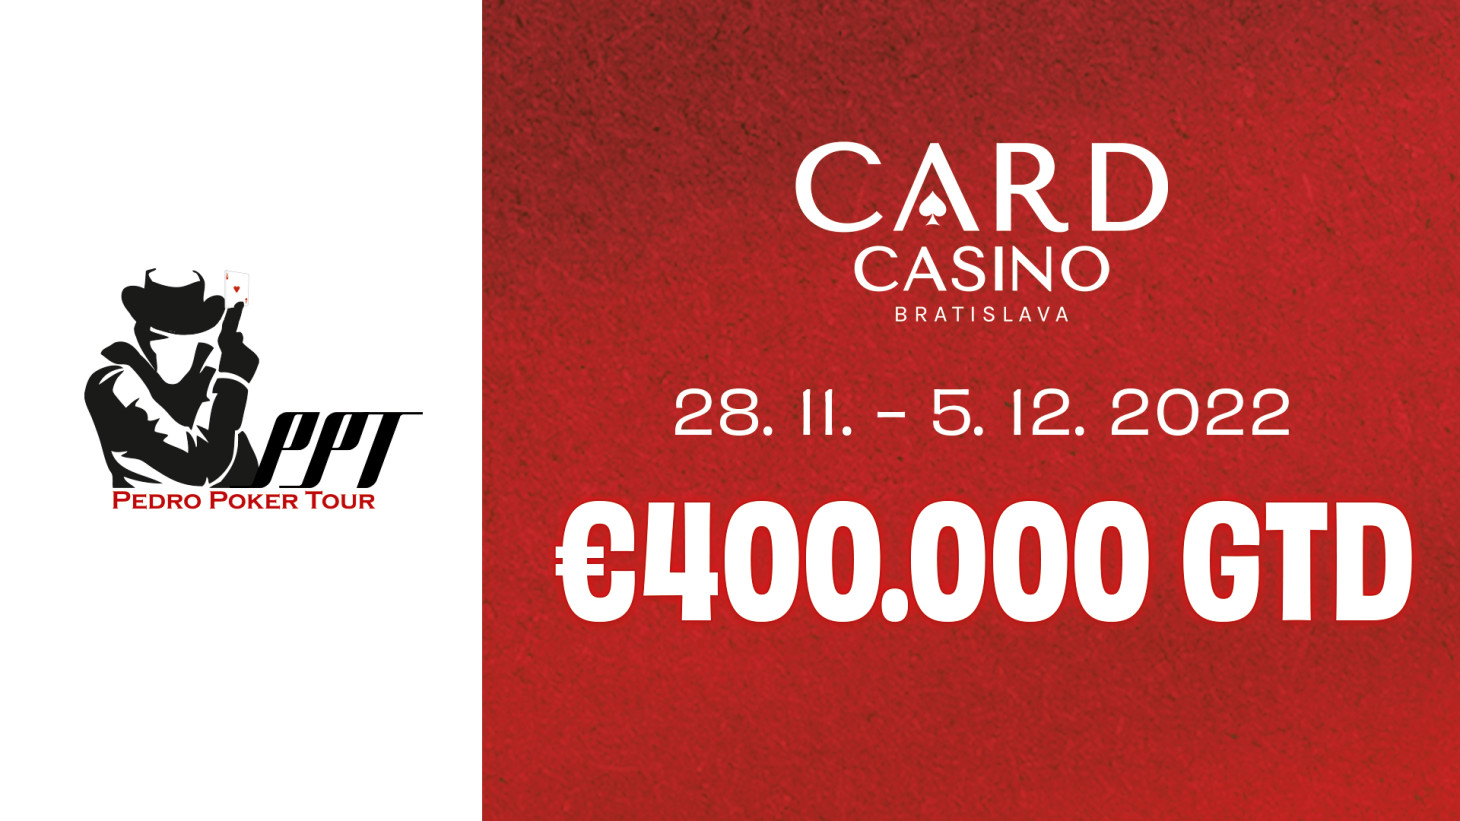 Už dnes štartuje Pedro Poker Tour s 400.000€ GTD!